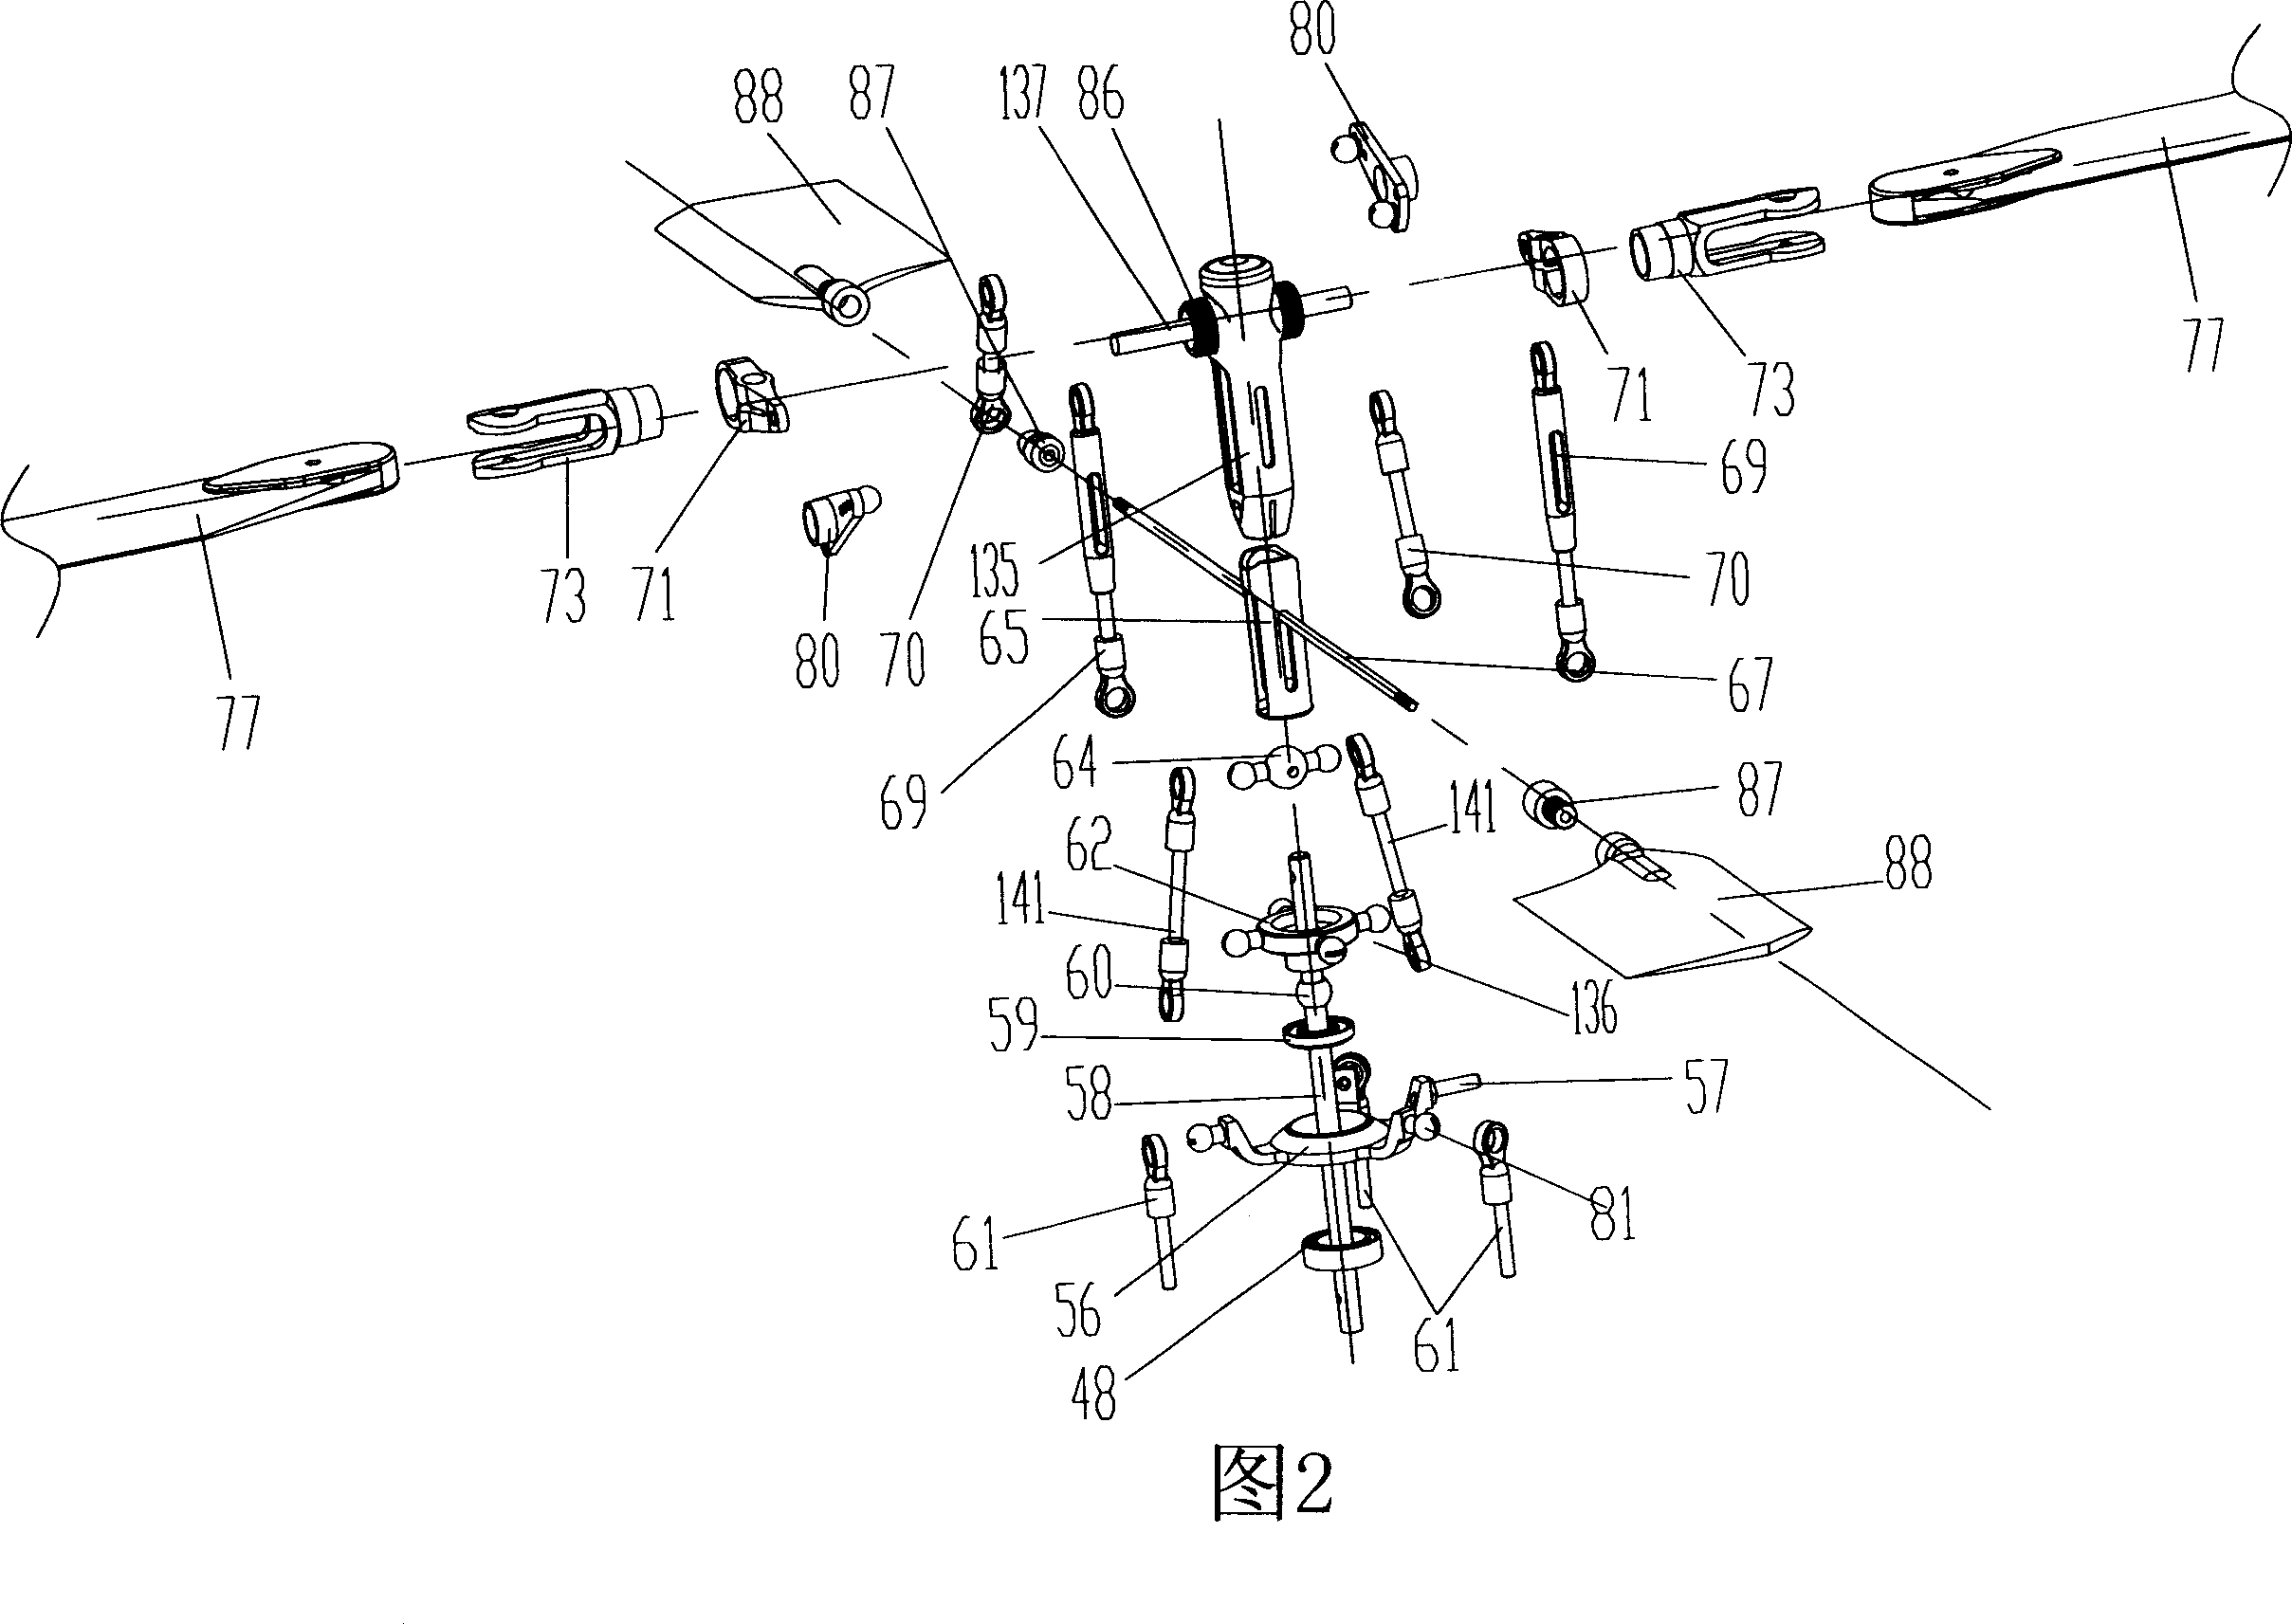 Steering mechanism for model helicopter